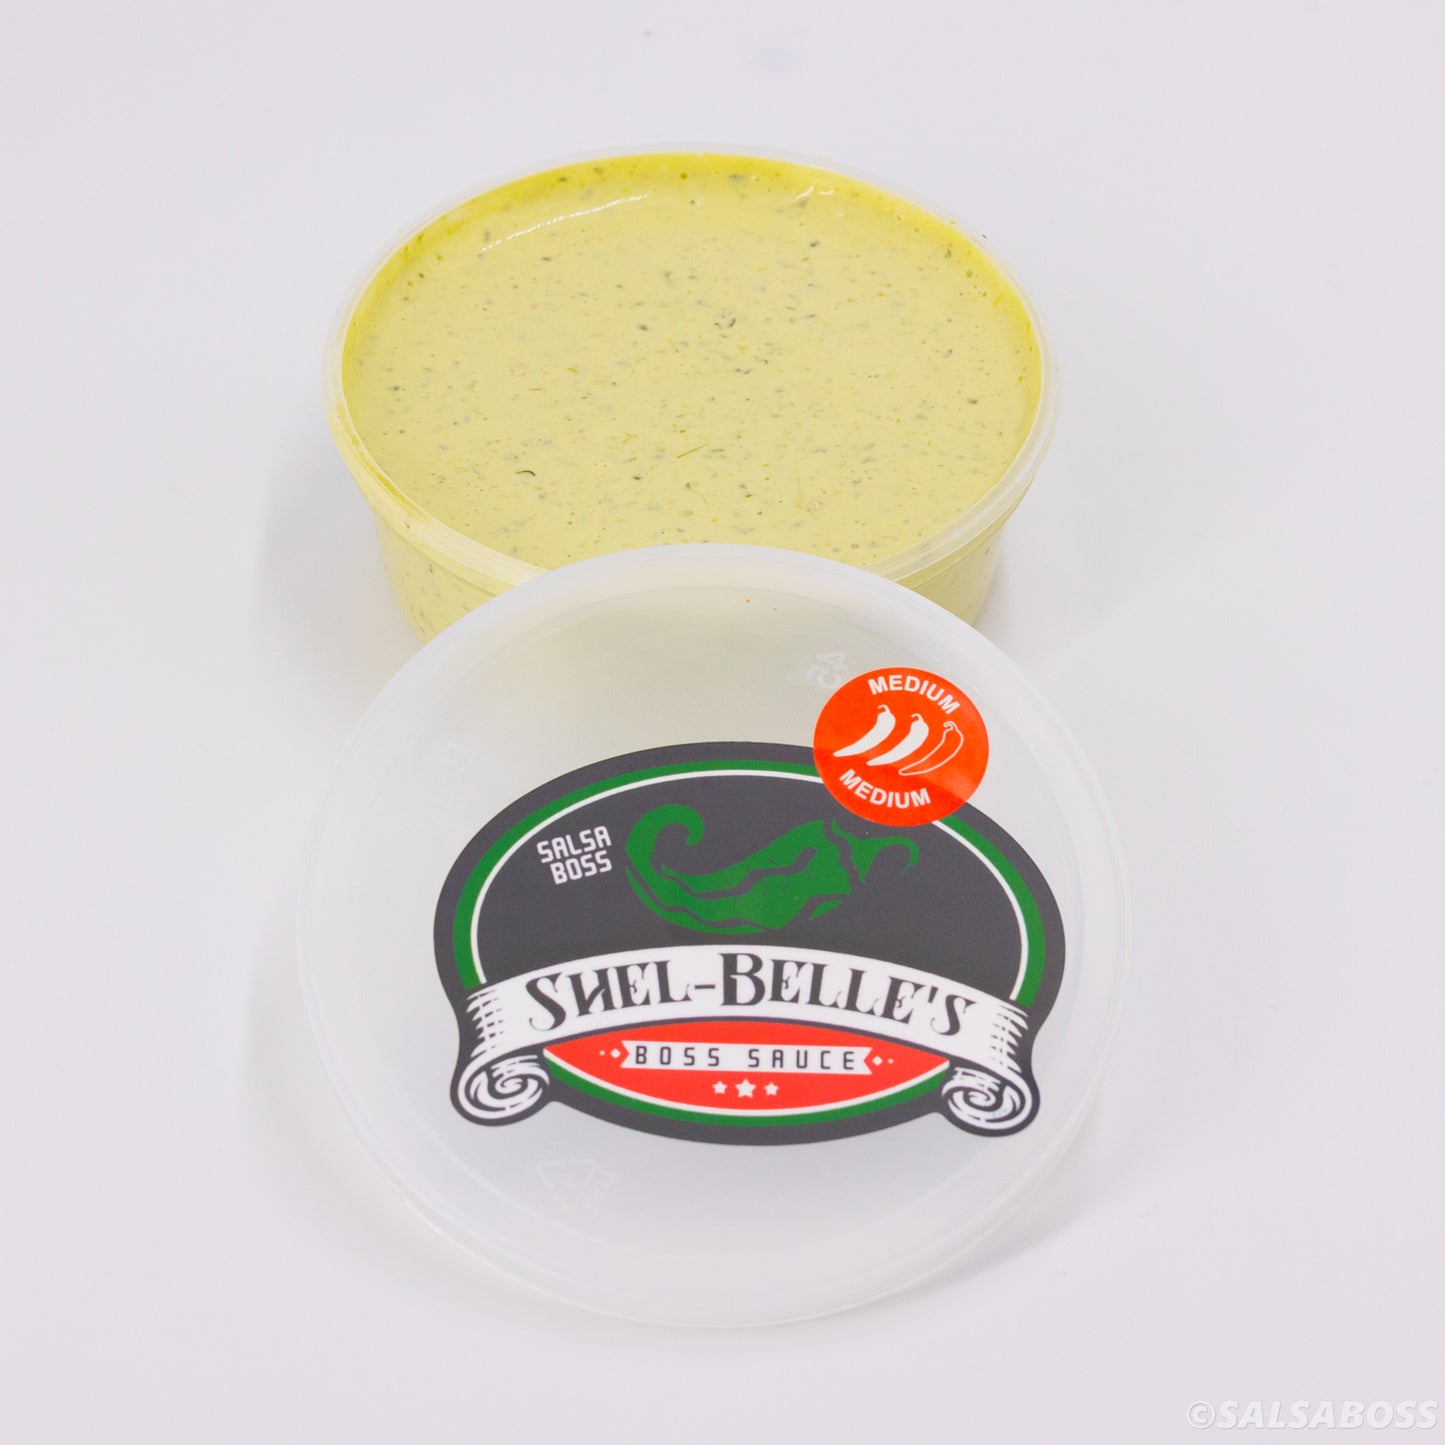 Shel-Belle’s Boss Sauce, Medium 8oz.